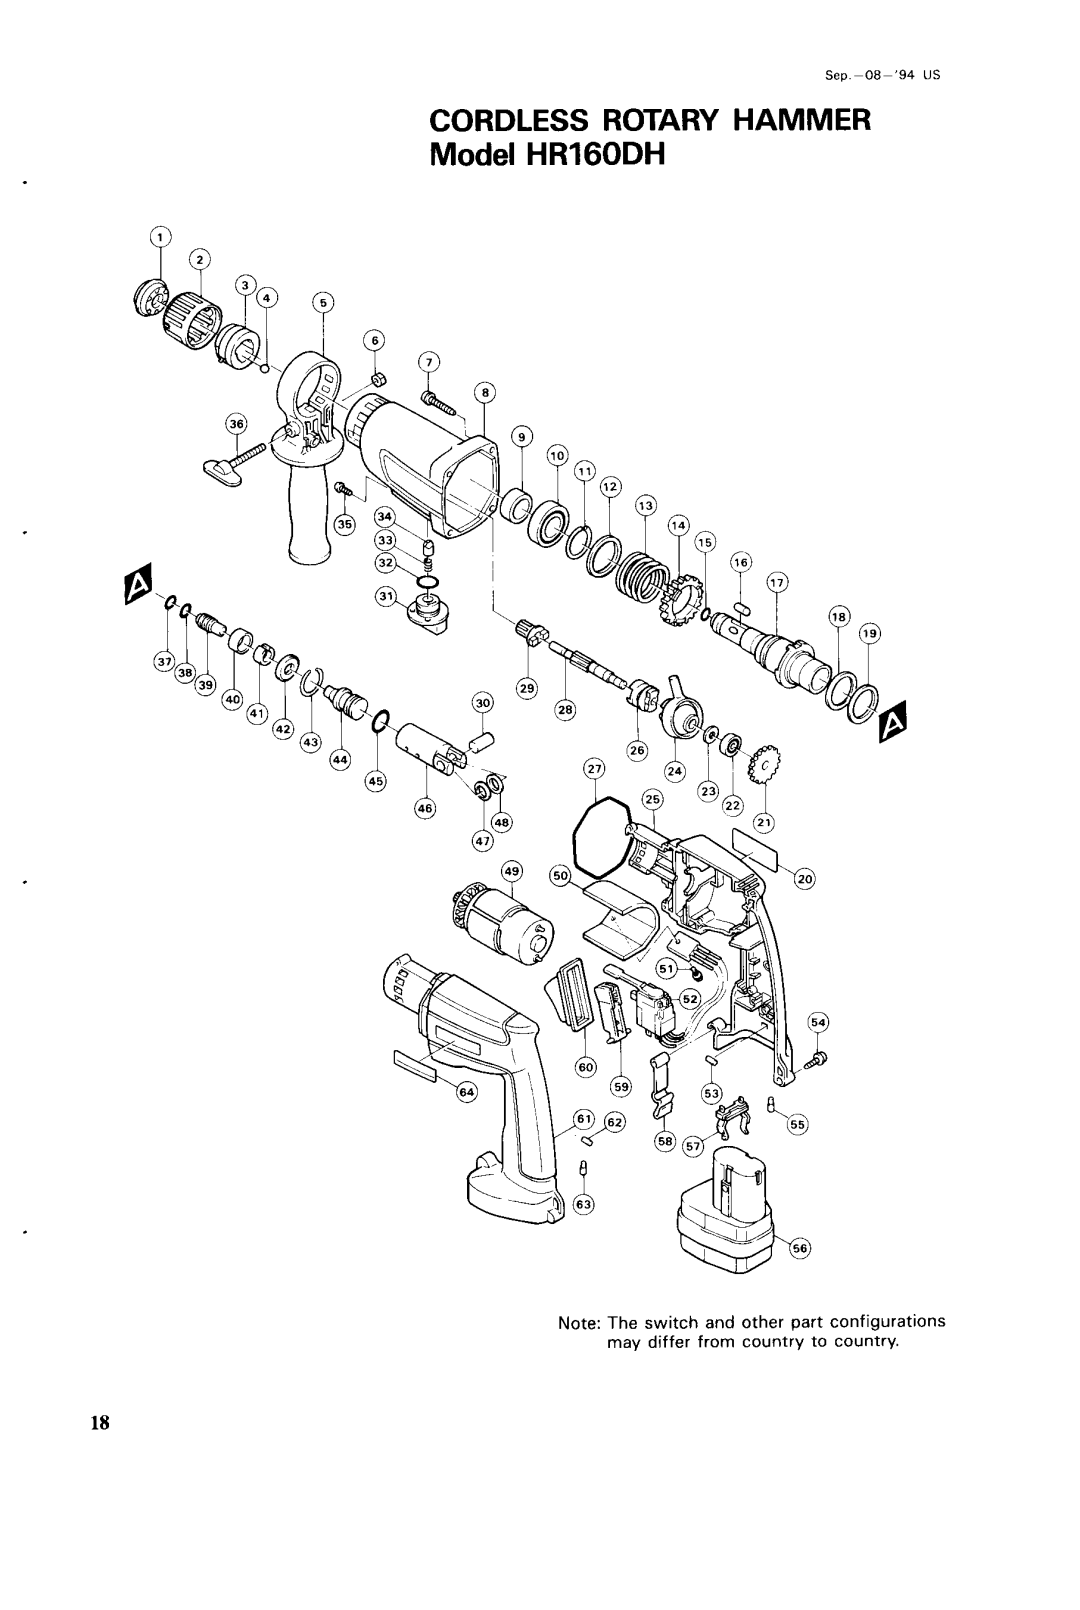 Makita instruction manual CORDLESS ROTARY HAMMER Model HRIGODH, Sep -08-94 US 